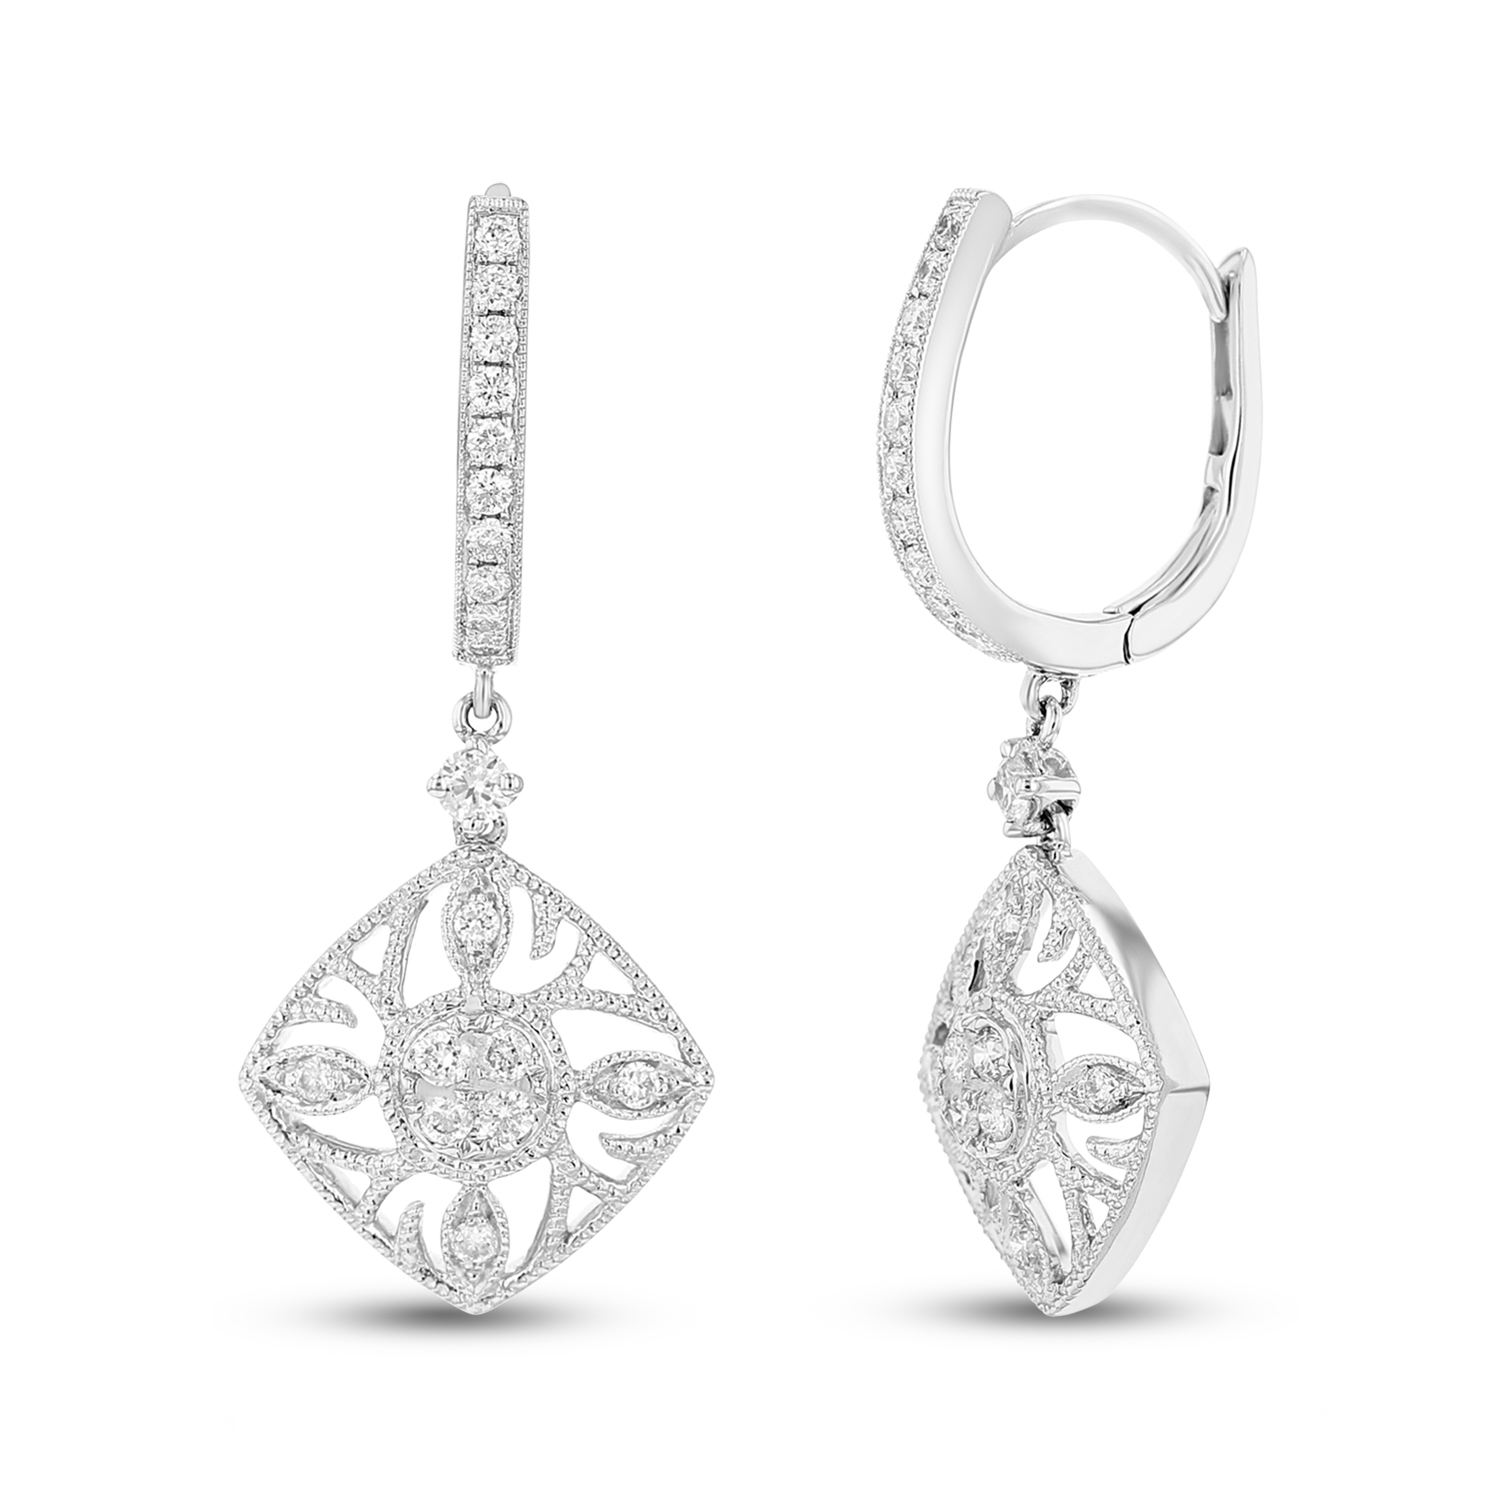 View 0.50ctw Diamonds Fashion Earrings in 18k White Gold